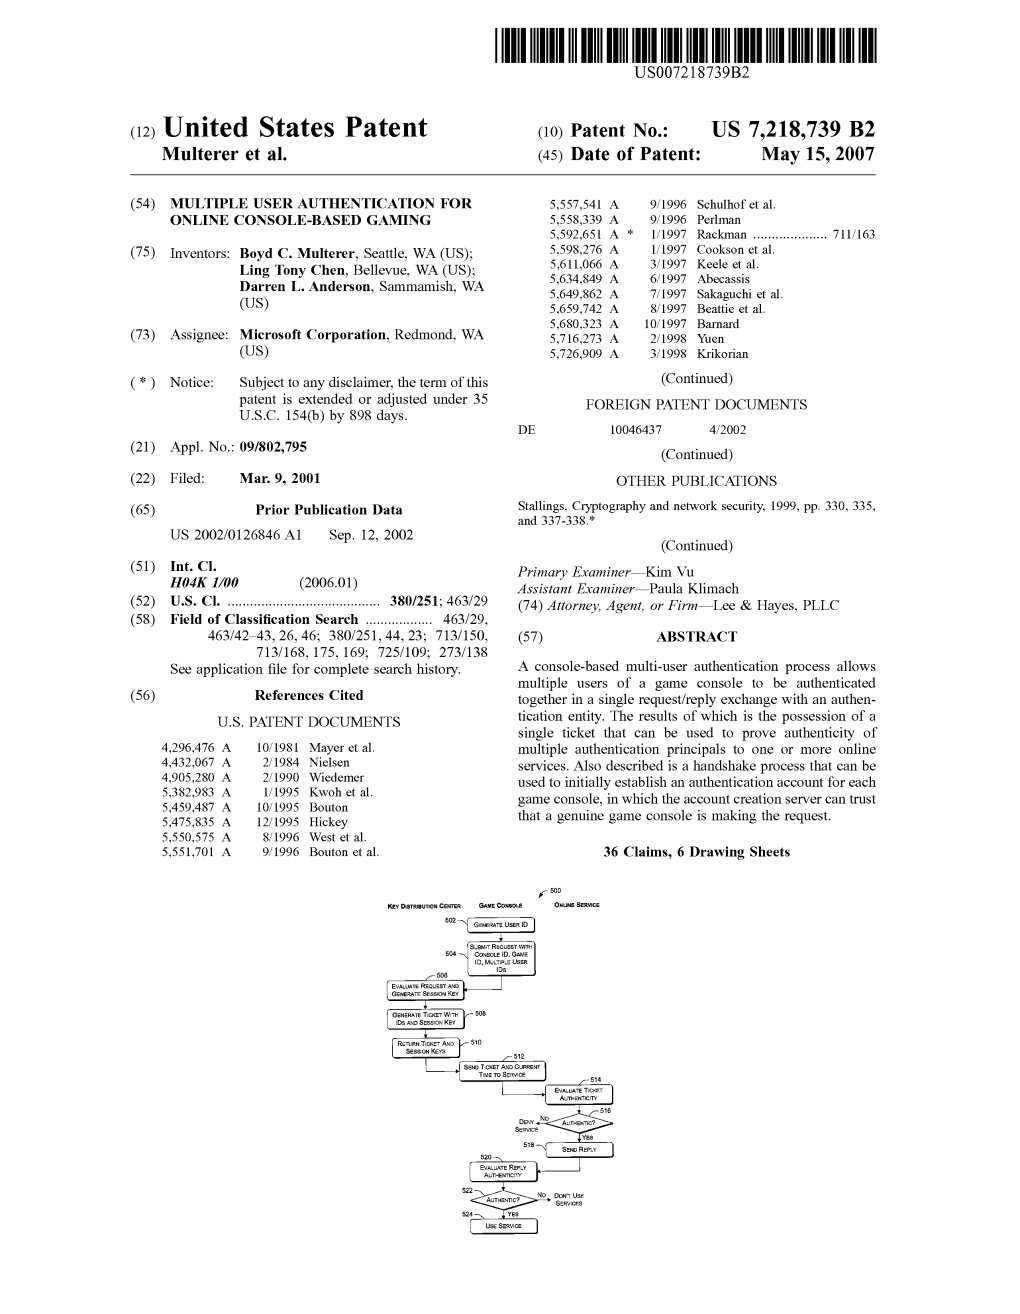 (12) United States Patent (10) Patent No.: US 7,218,739 B2 Multerer Et Al